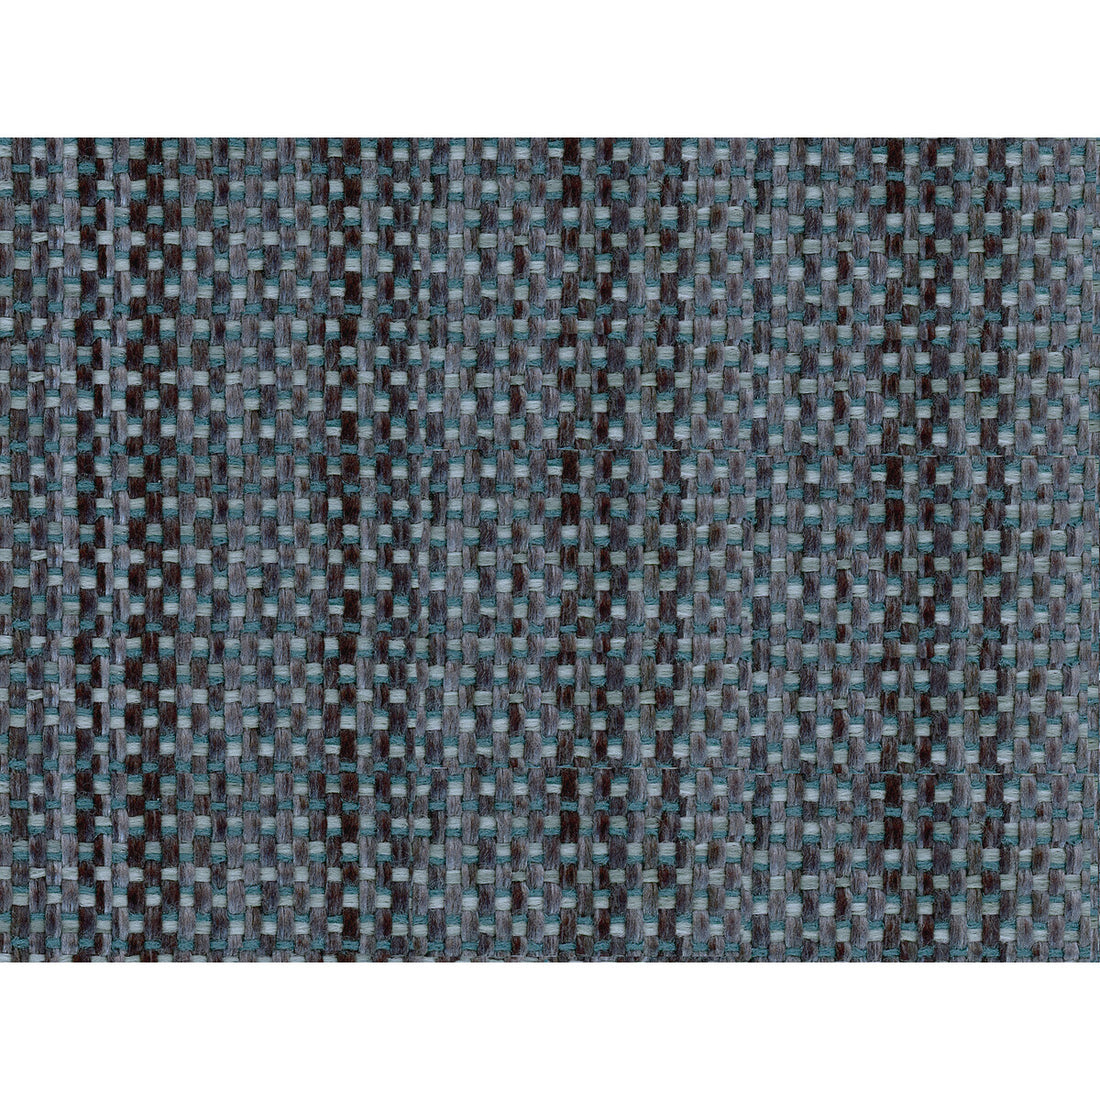 Kravet Smart fabric in 34342-50 color - pattern 34342.50.0 - by Kravet Smart